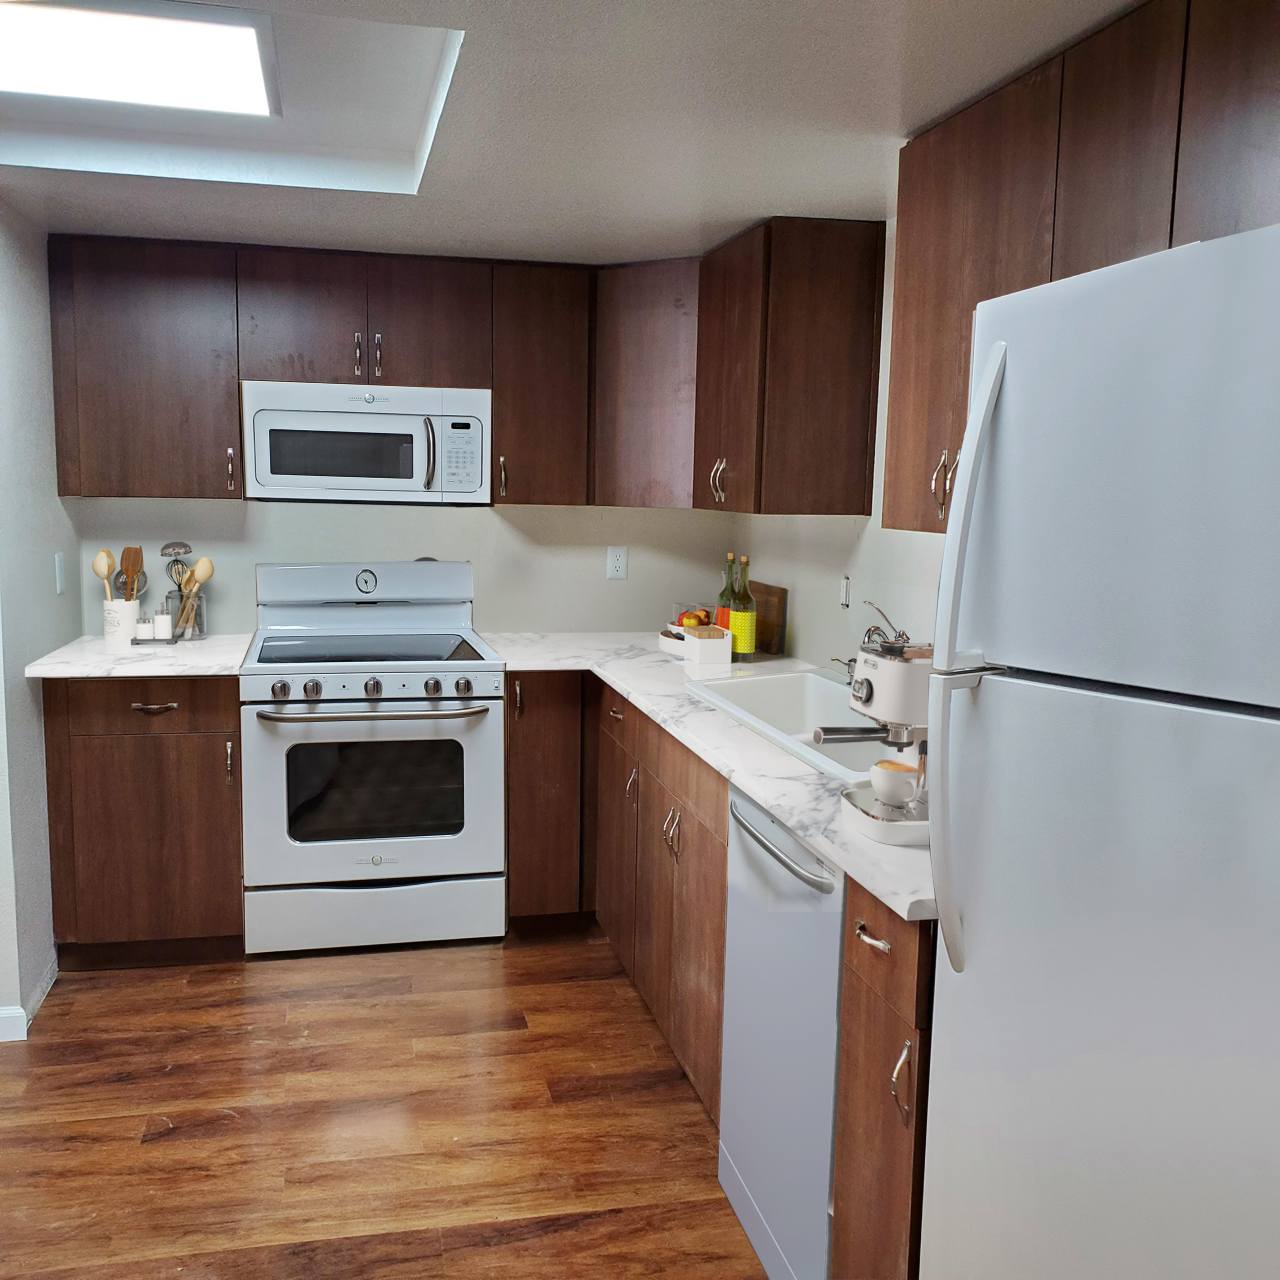 Photo of kitchen in senior living apartment